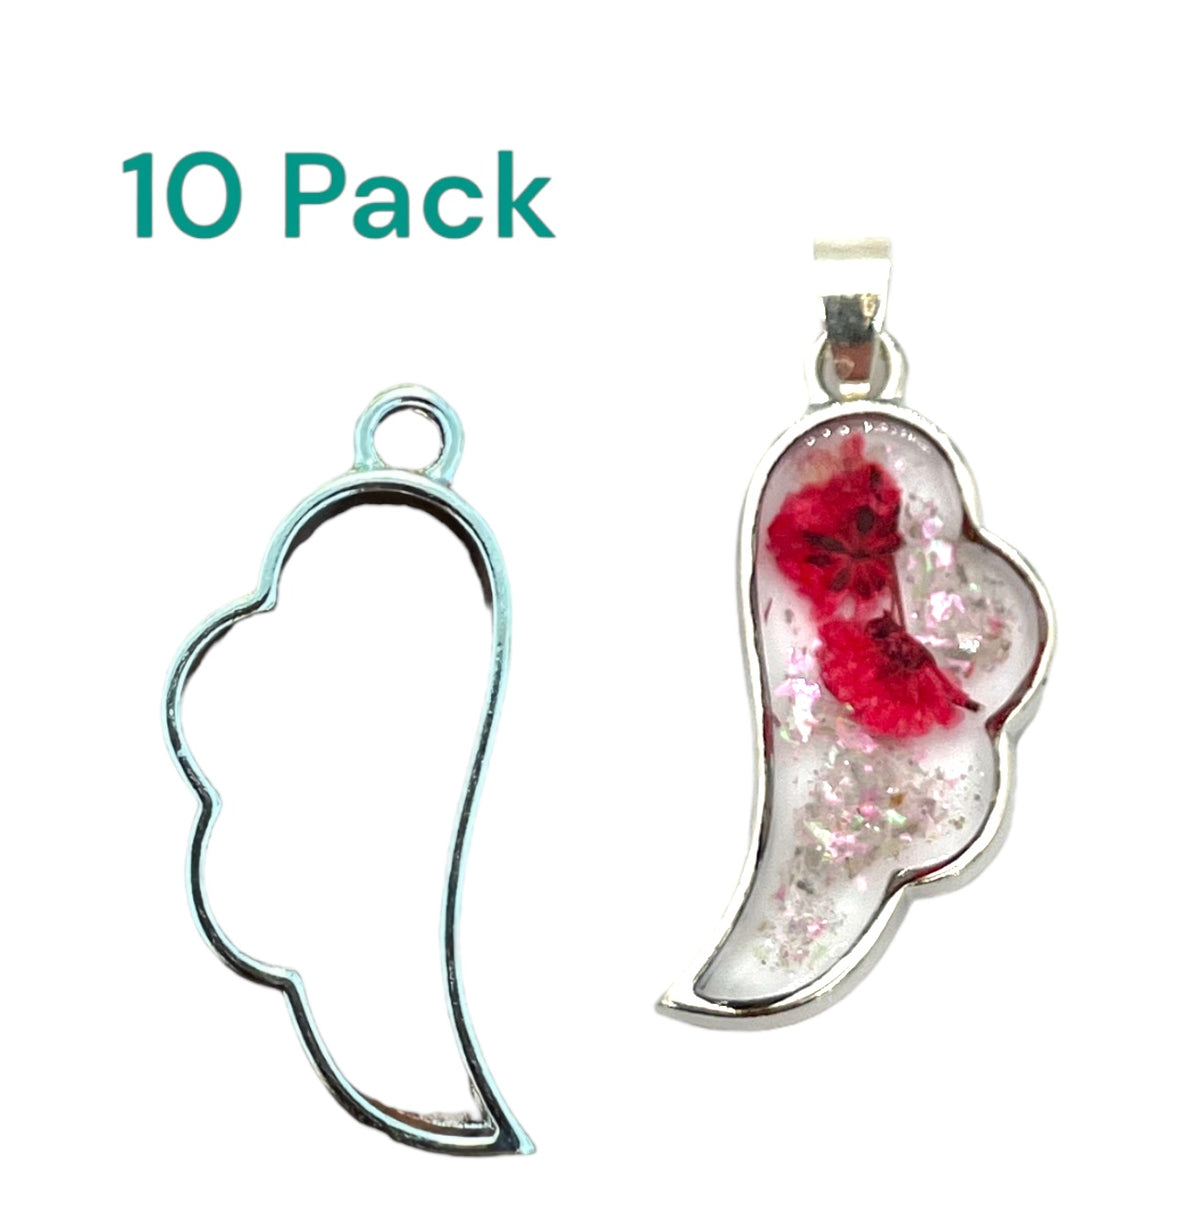 10 Pack of Angel Wing Shaped Open Back Pendant or Earring Bezel Blank for UV or Epoxy Resin